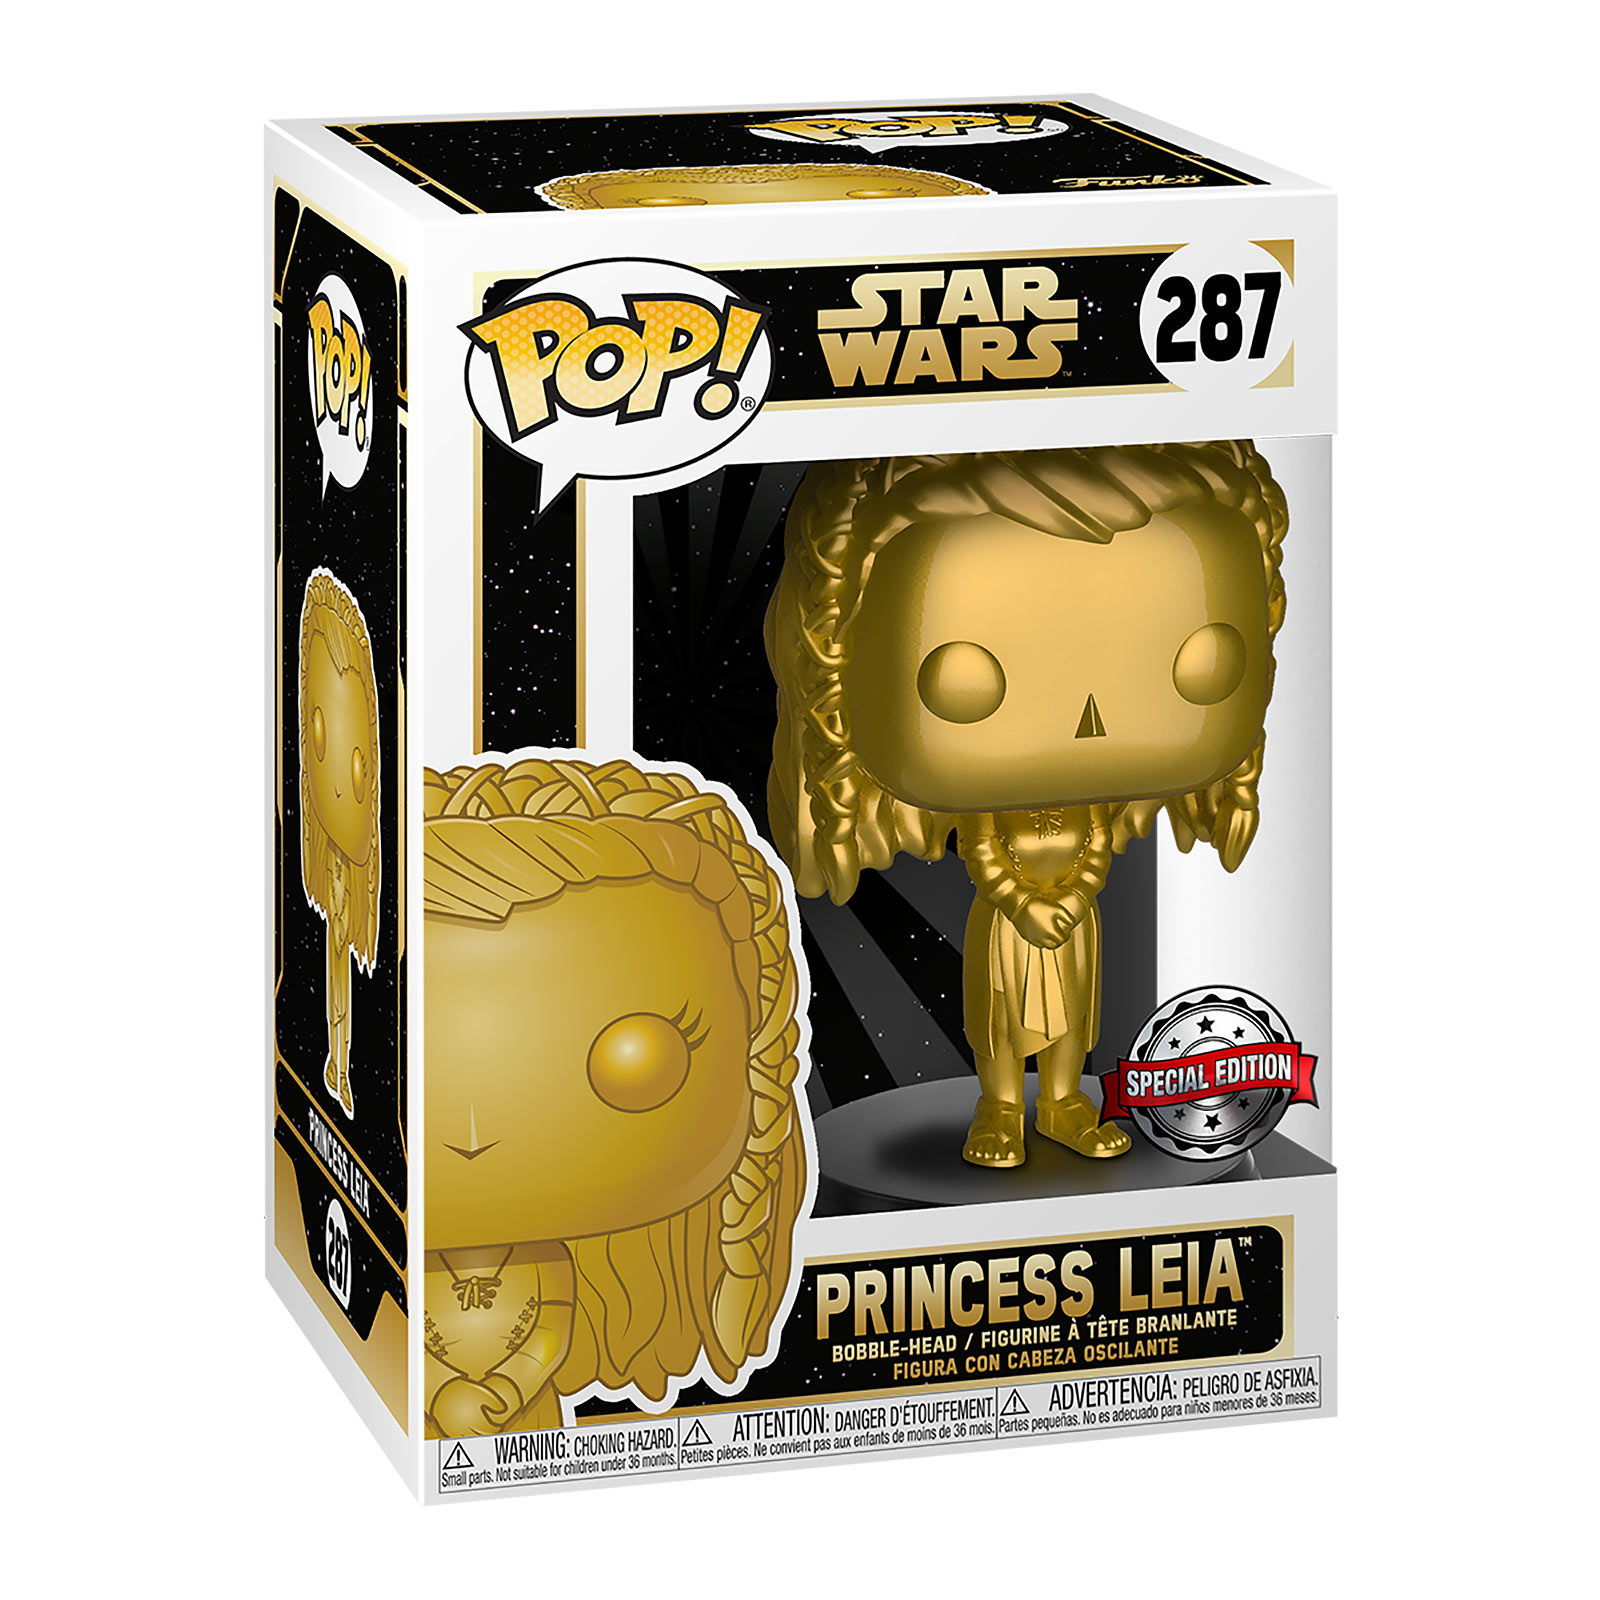 Star Wars - Princess Leia Gold Funko Pop bobblehead figure